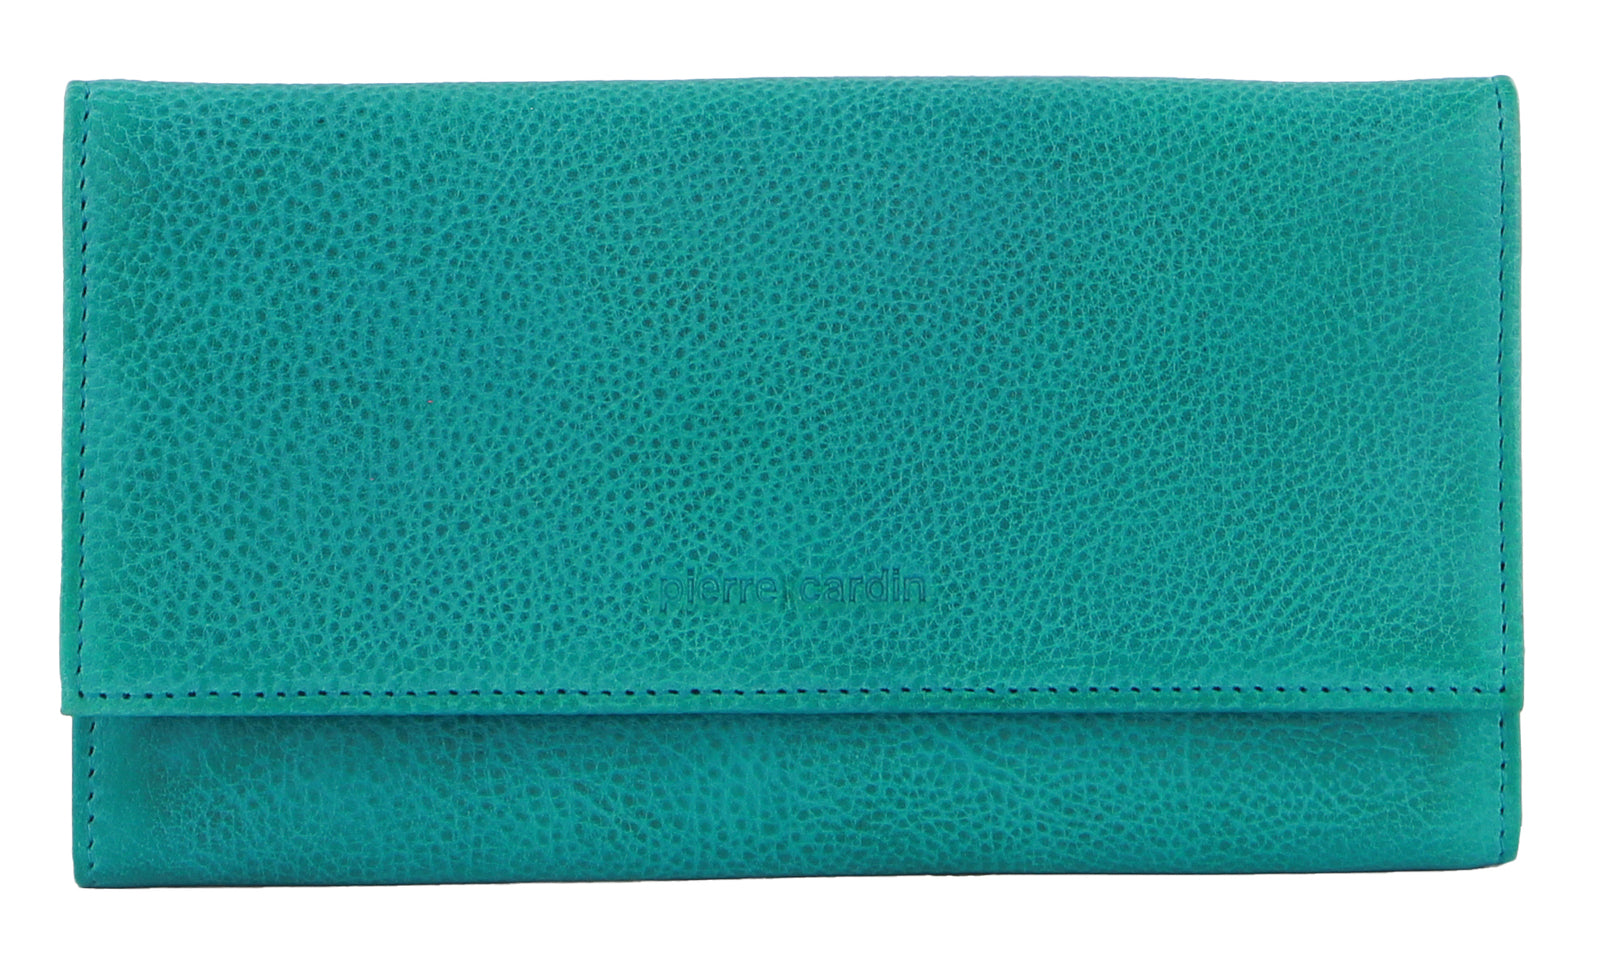 Pierre Cardin Womens Soft Italian Leather RFID Purse Wallet - Turquoise - SILBERSHELL